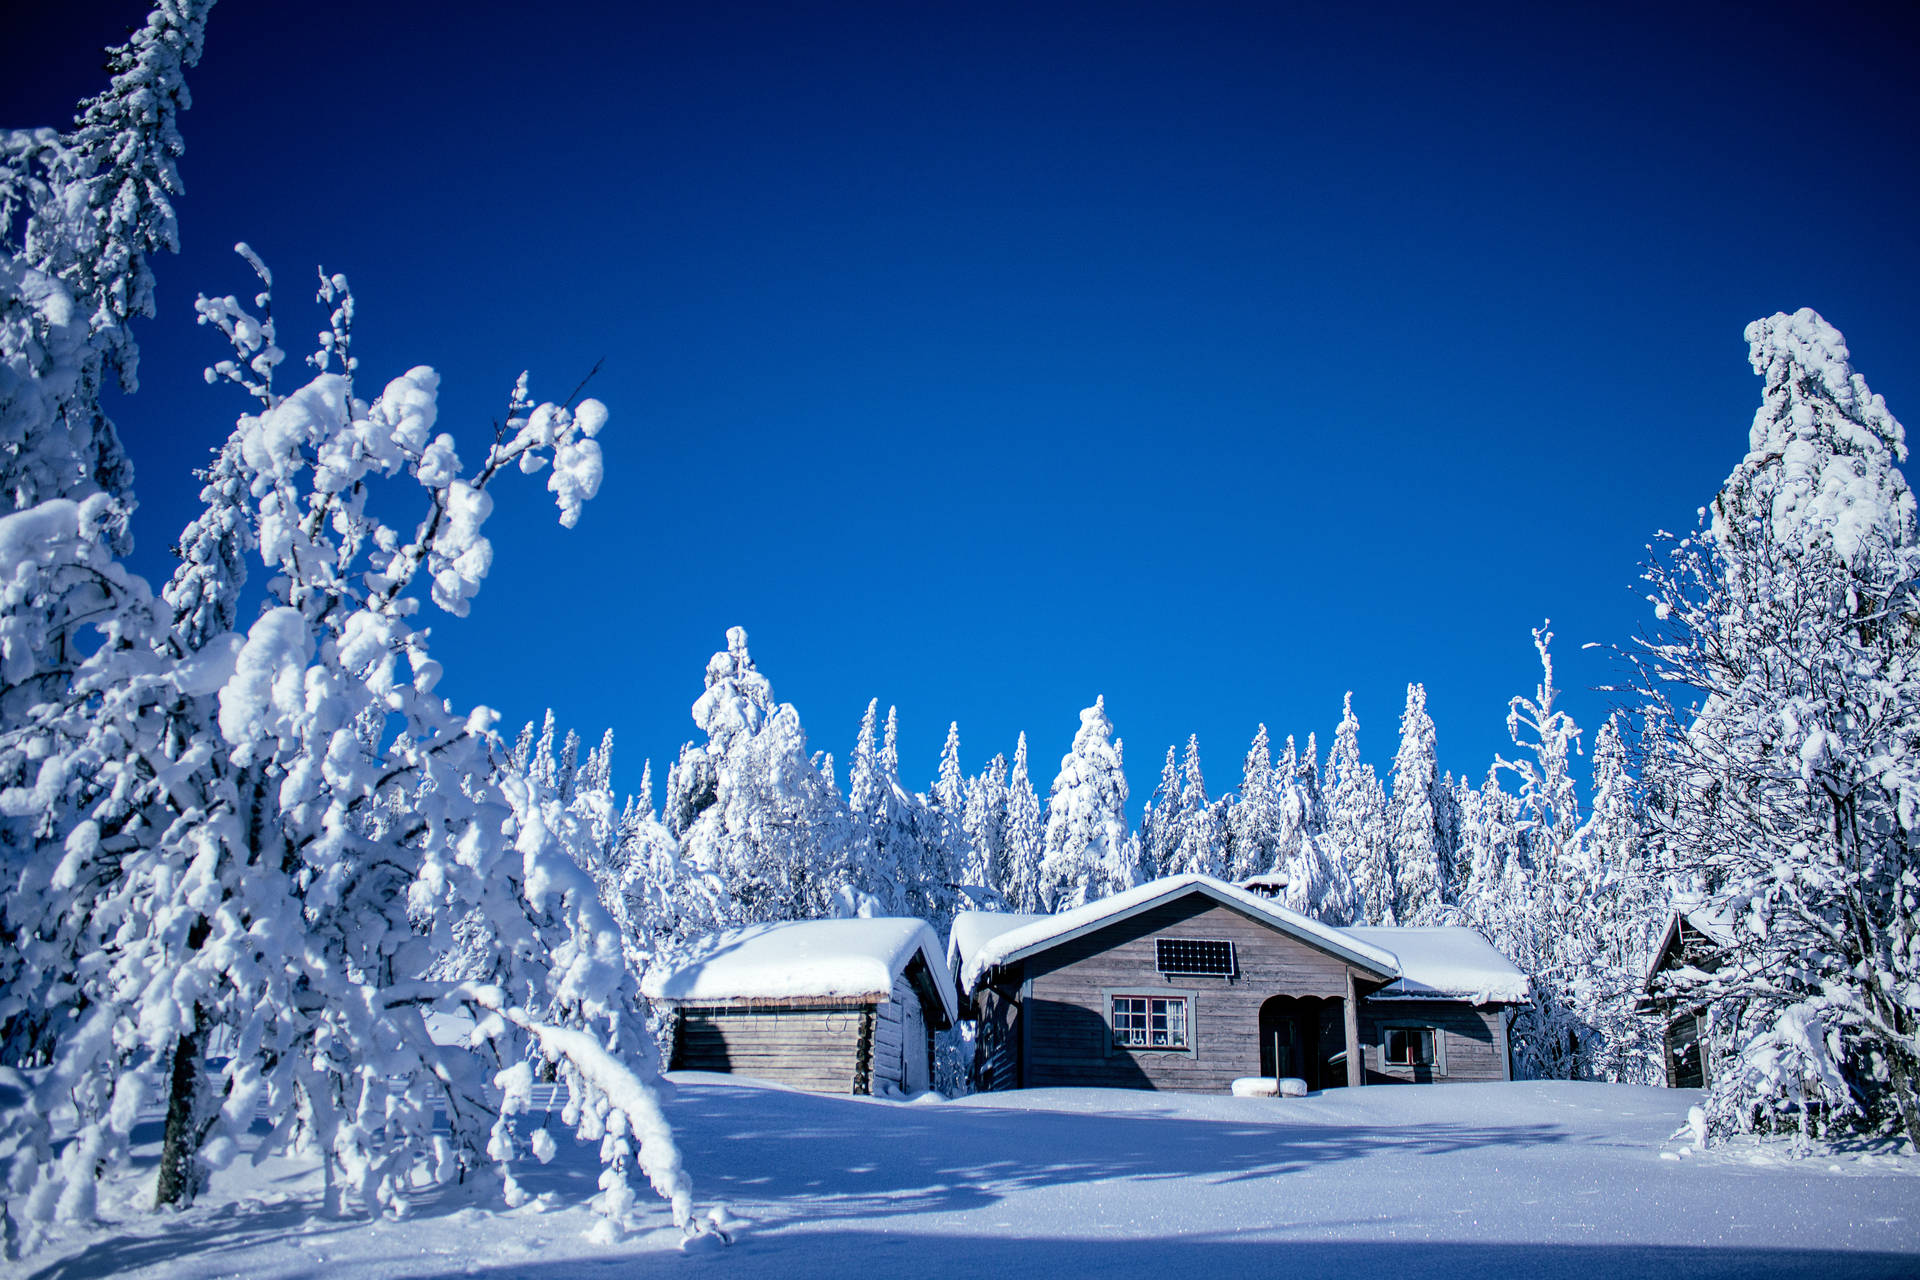 Snowy Trees And House Best Desktop Wallpaper